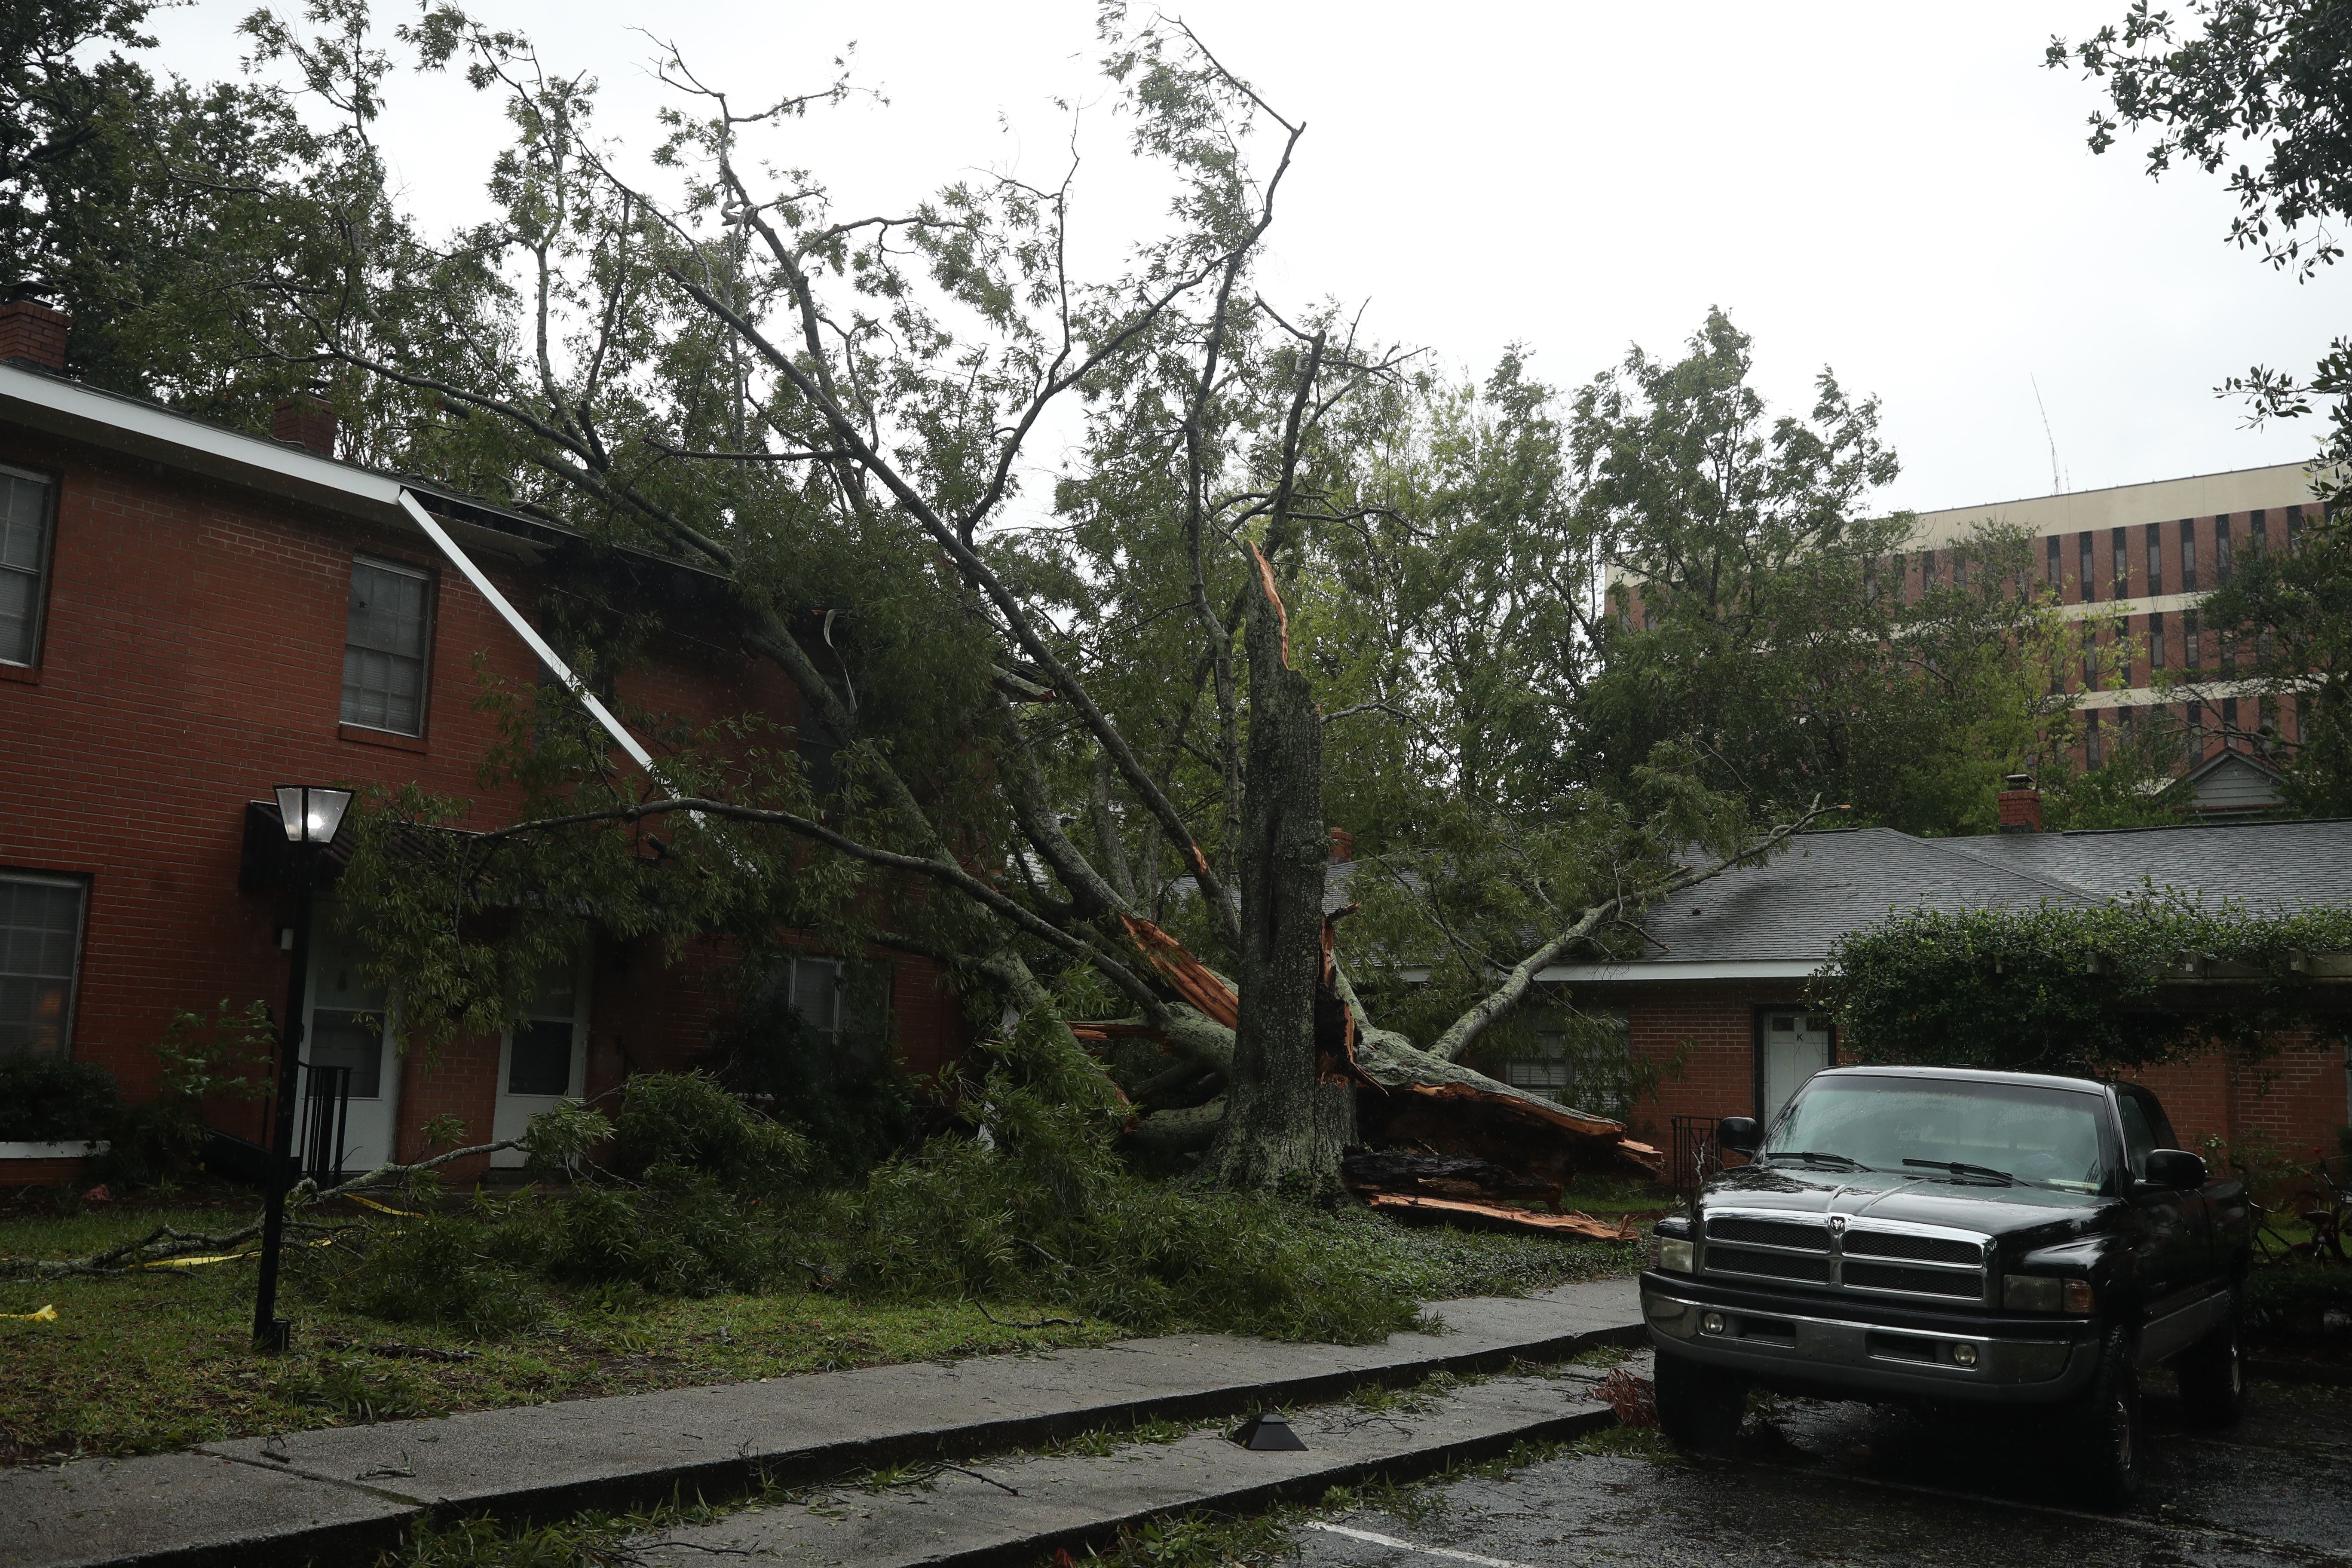  A fallen tree rests on a house as Hurricane Dorian hit South Carolina